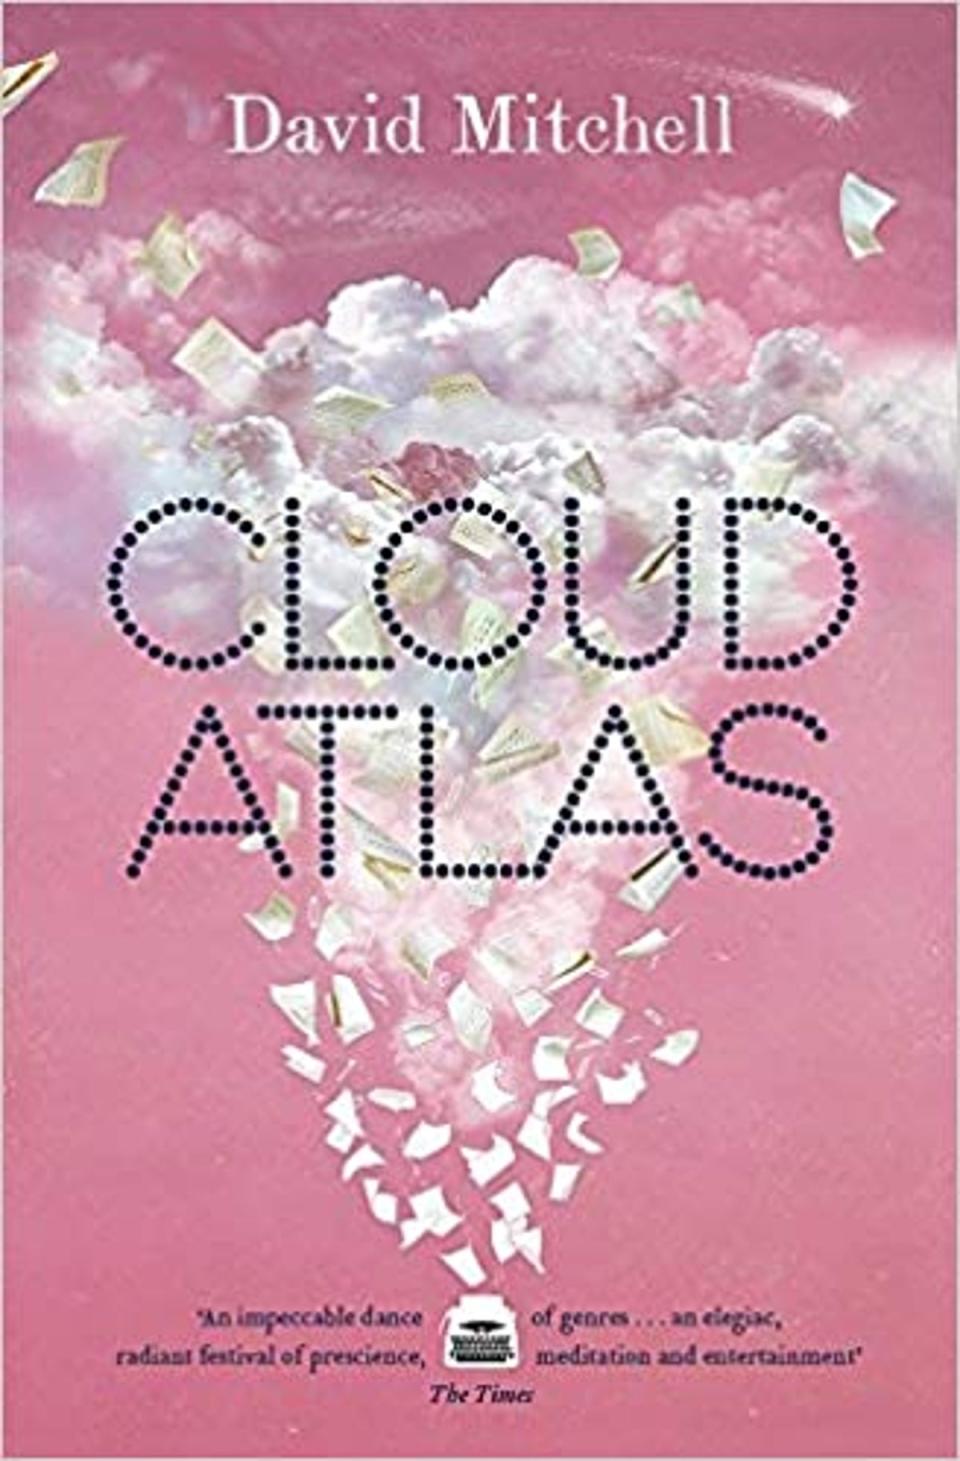 Cloud Atlas by David Mitchell (PR handout)